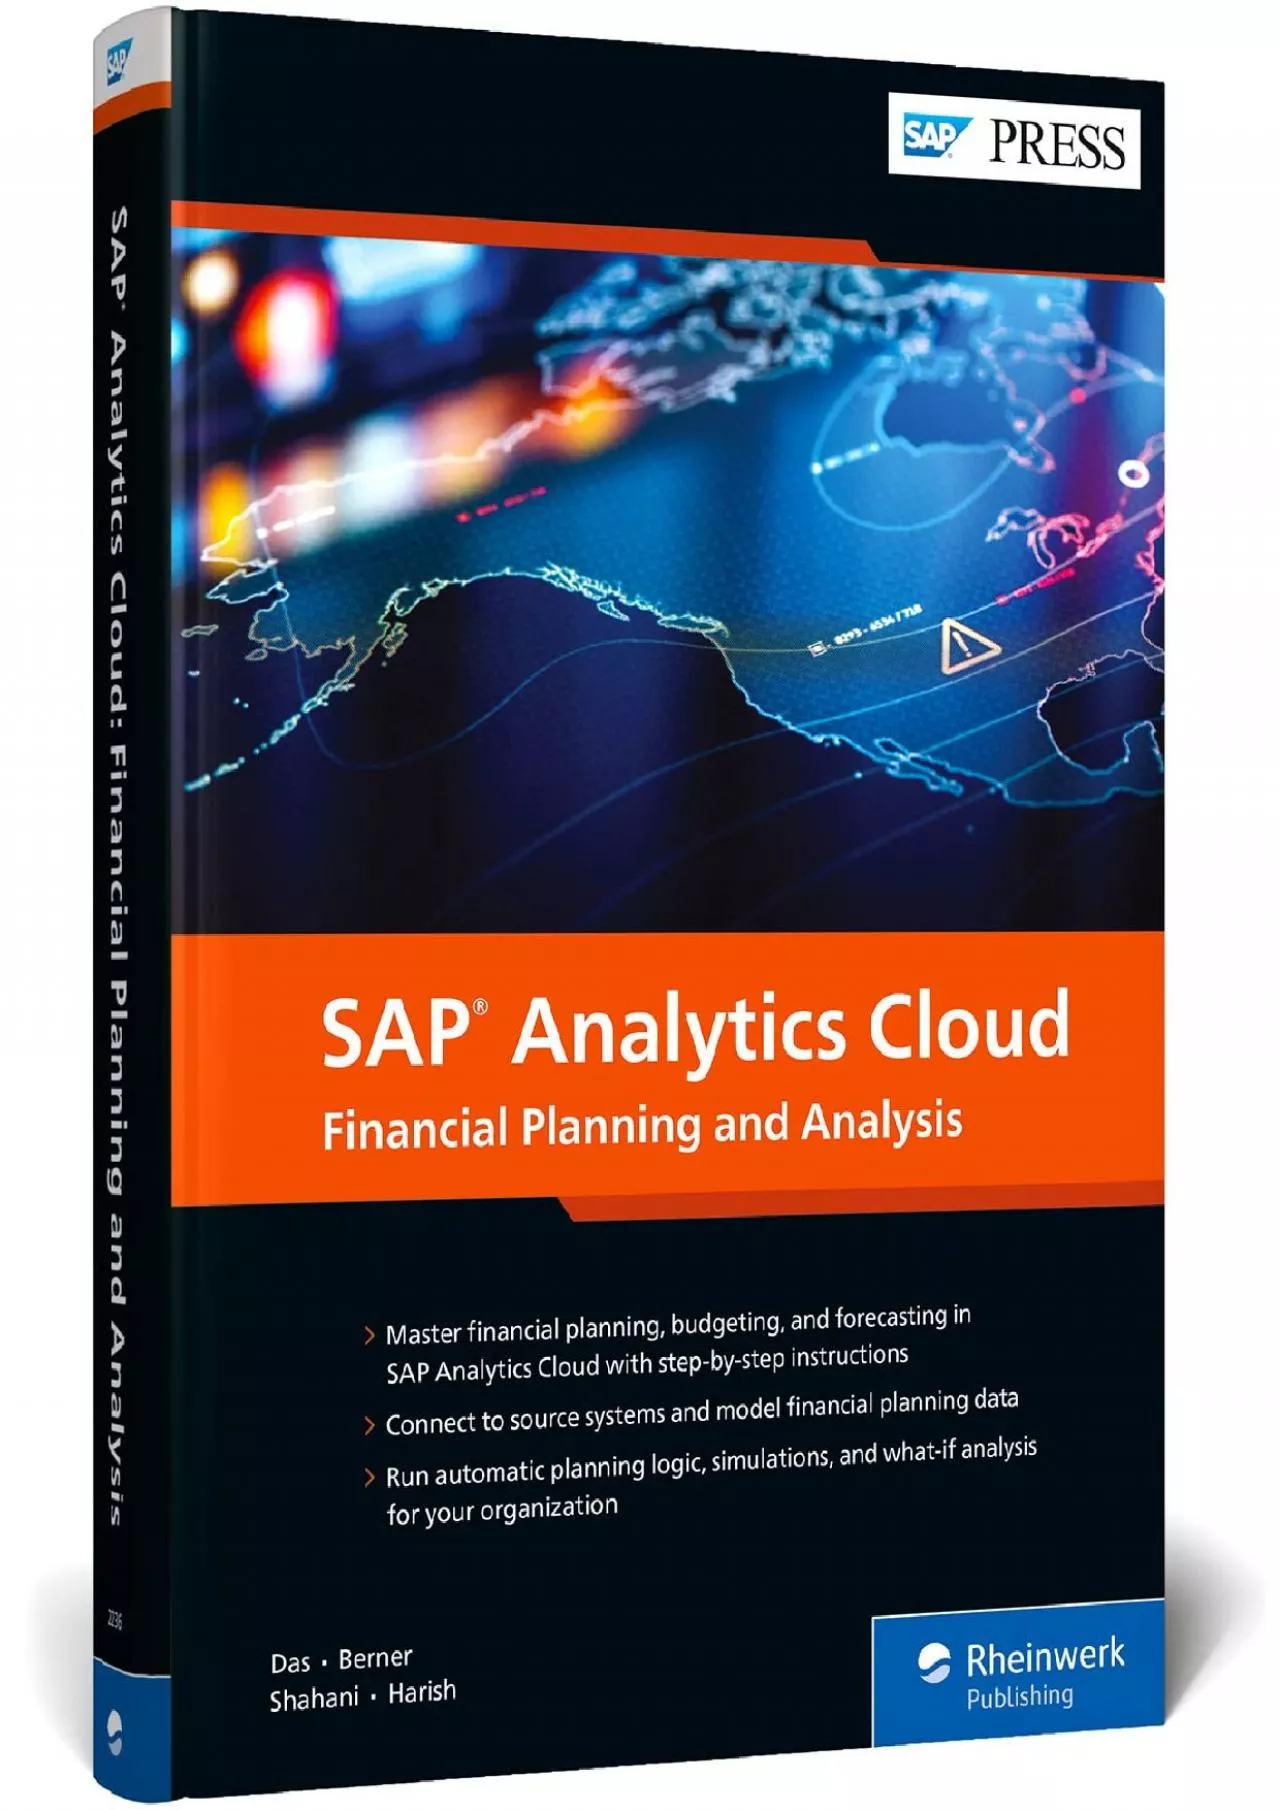 (READ)-SAP Analytics Cloud: Financial Planning and Analysis (SAP PRESS)